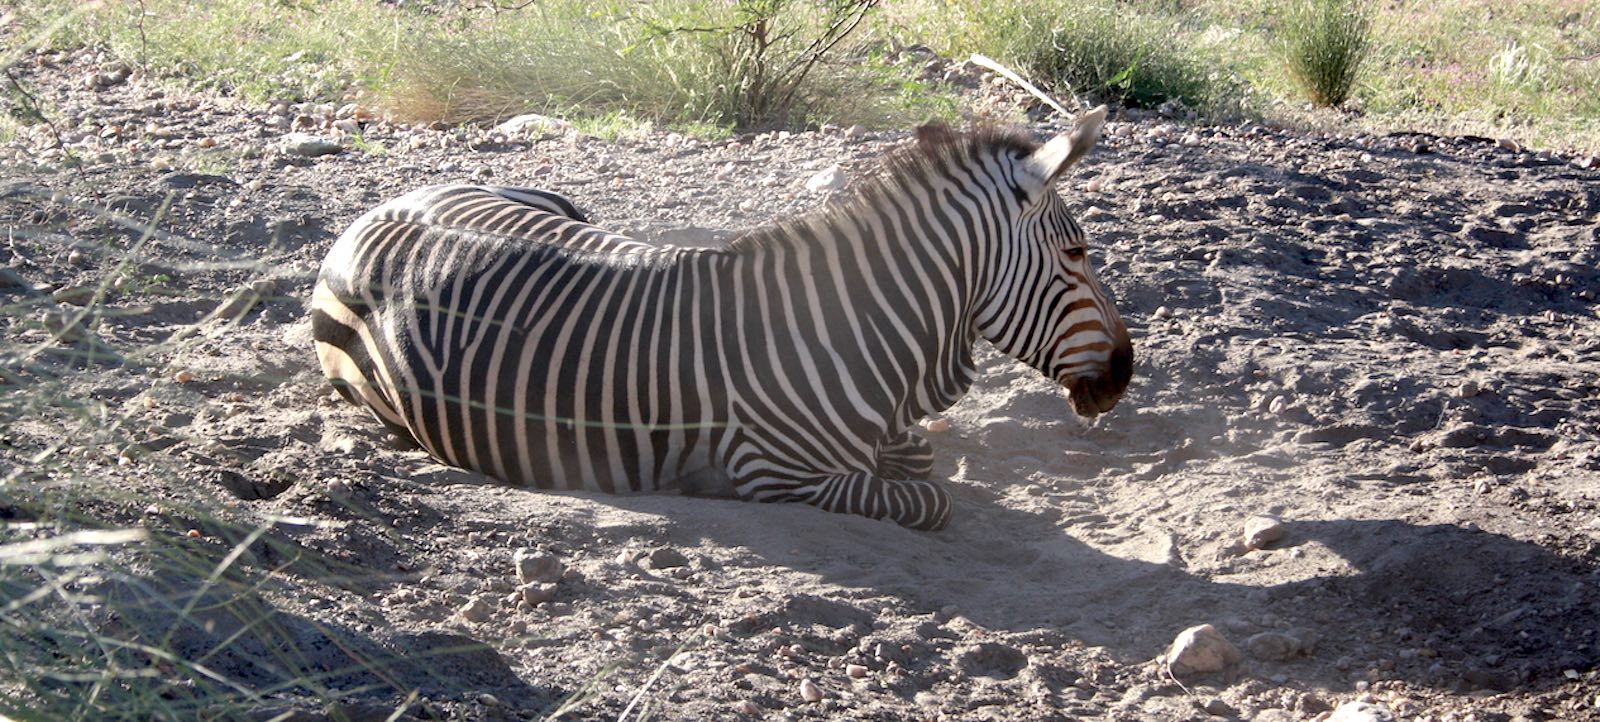 A zebra sitting on the dusty ground.